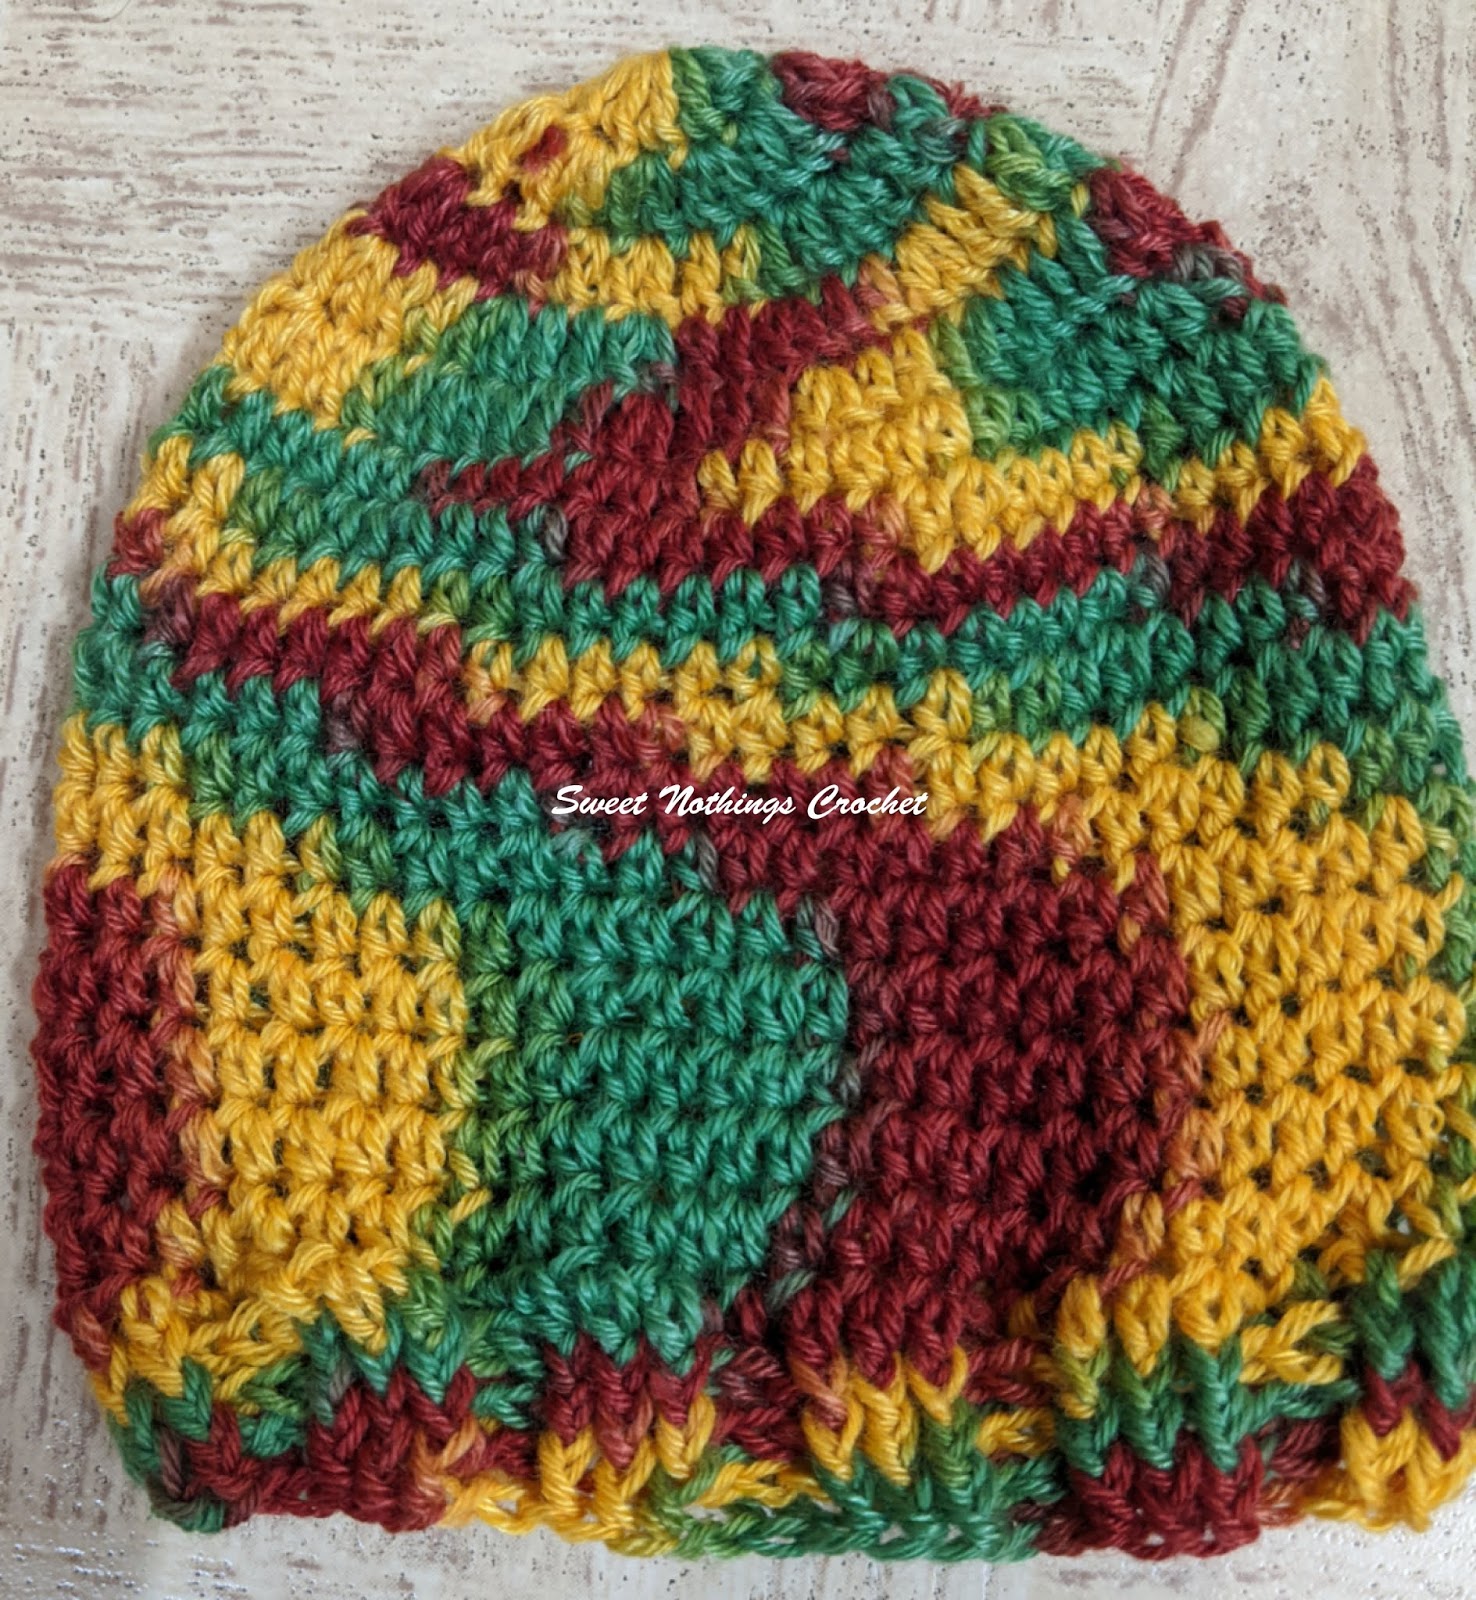 Sweet Nothings Crochet: A LOVELY SCARF N CAP SET